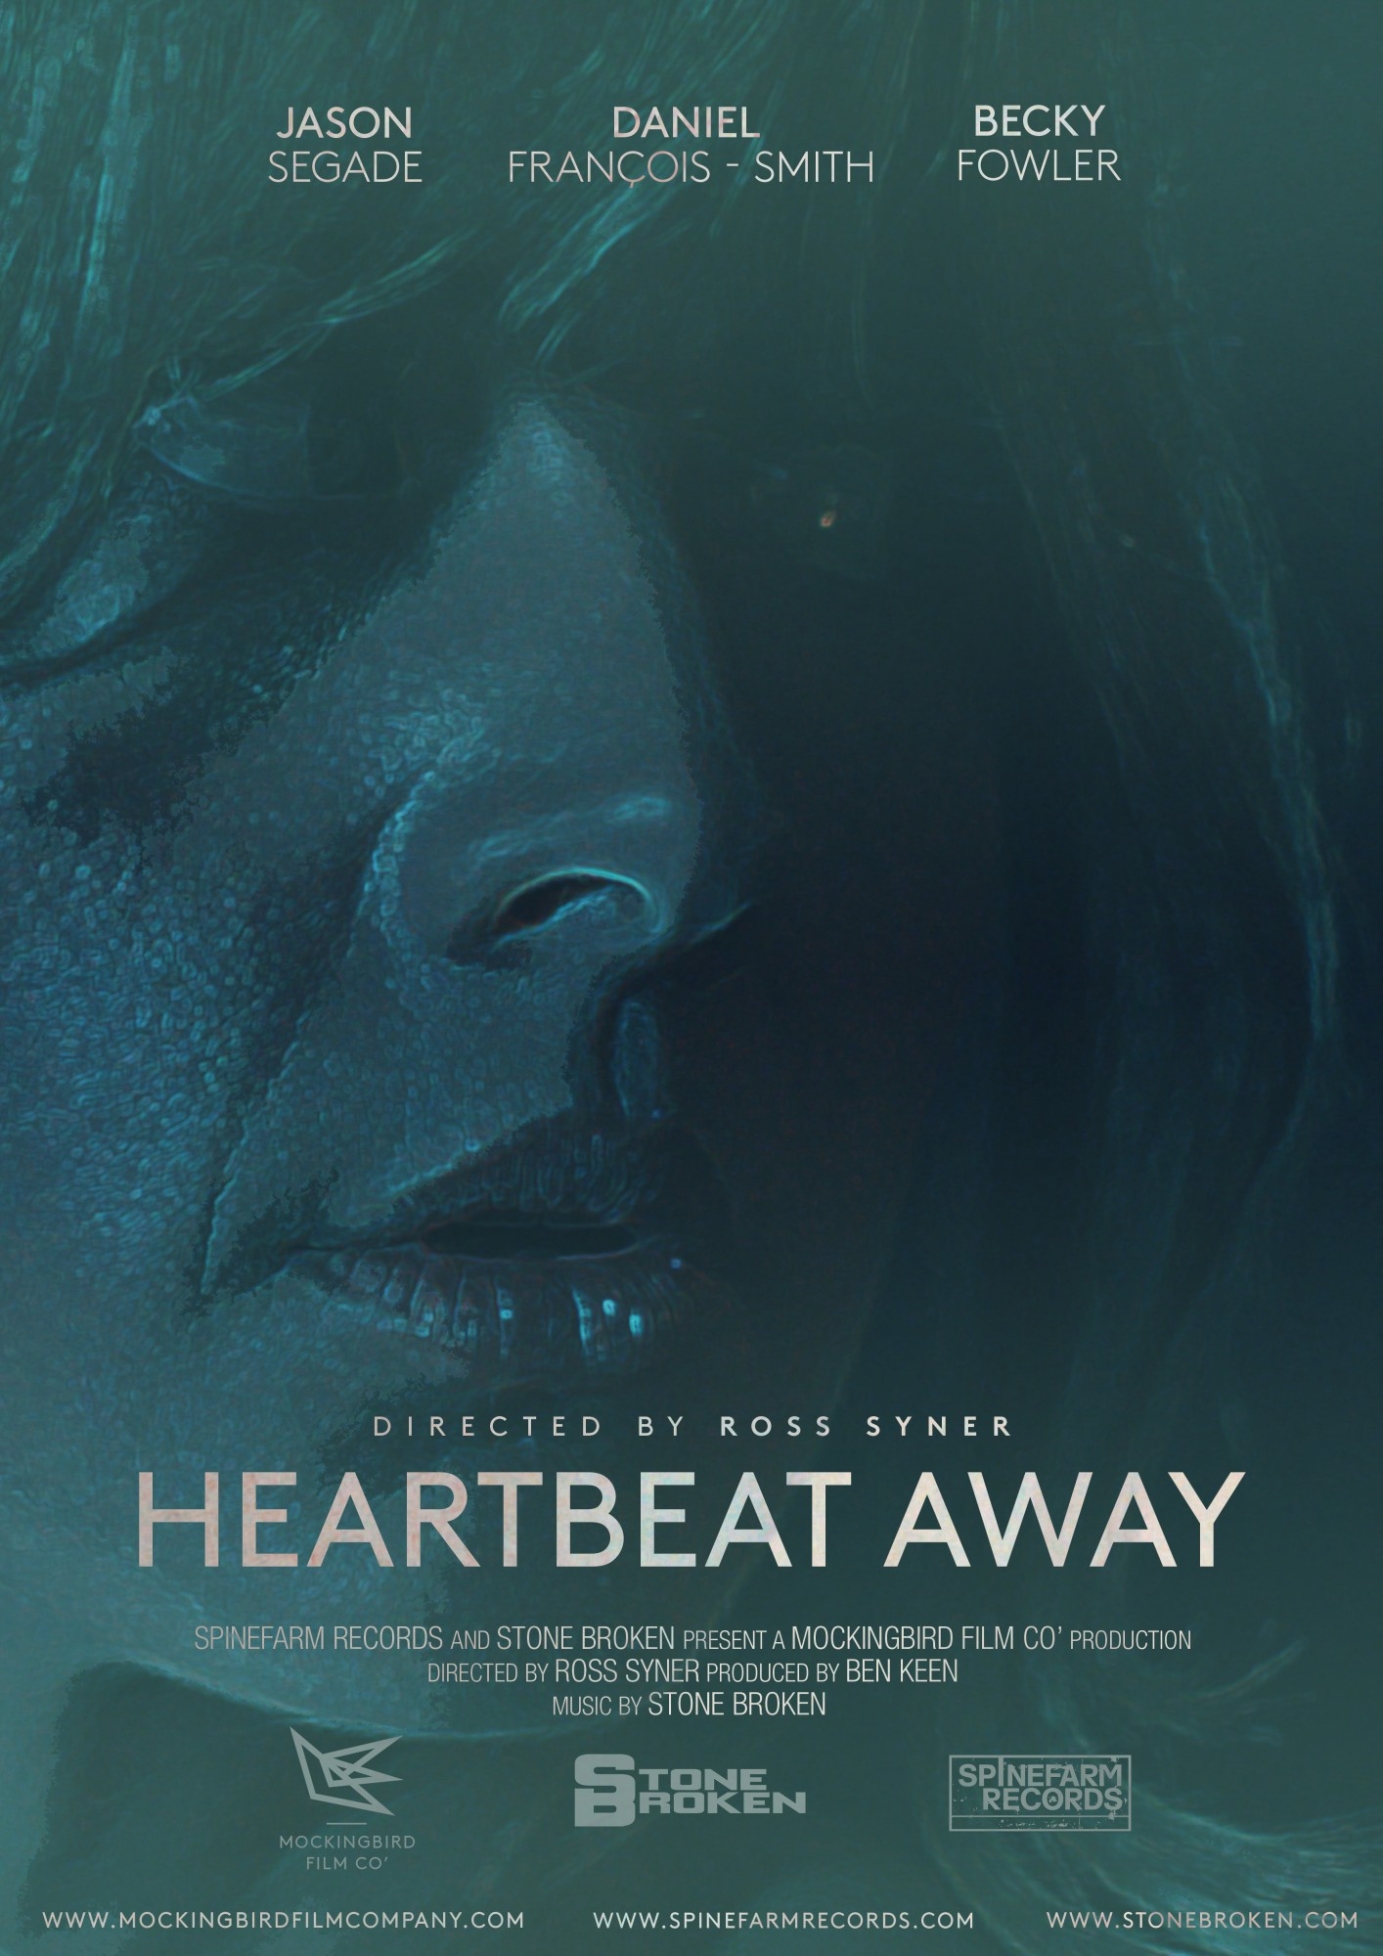 Music video for Heartbeat Away, Stone Broken by Mockingbird Film Co